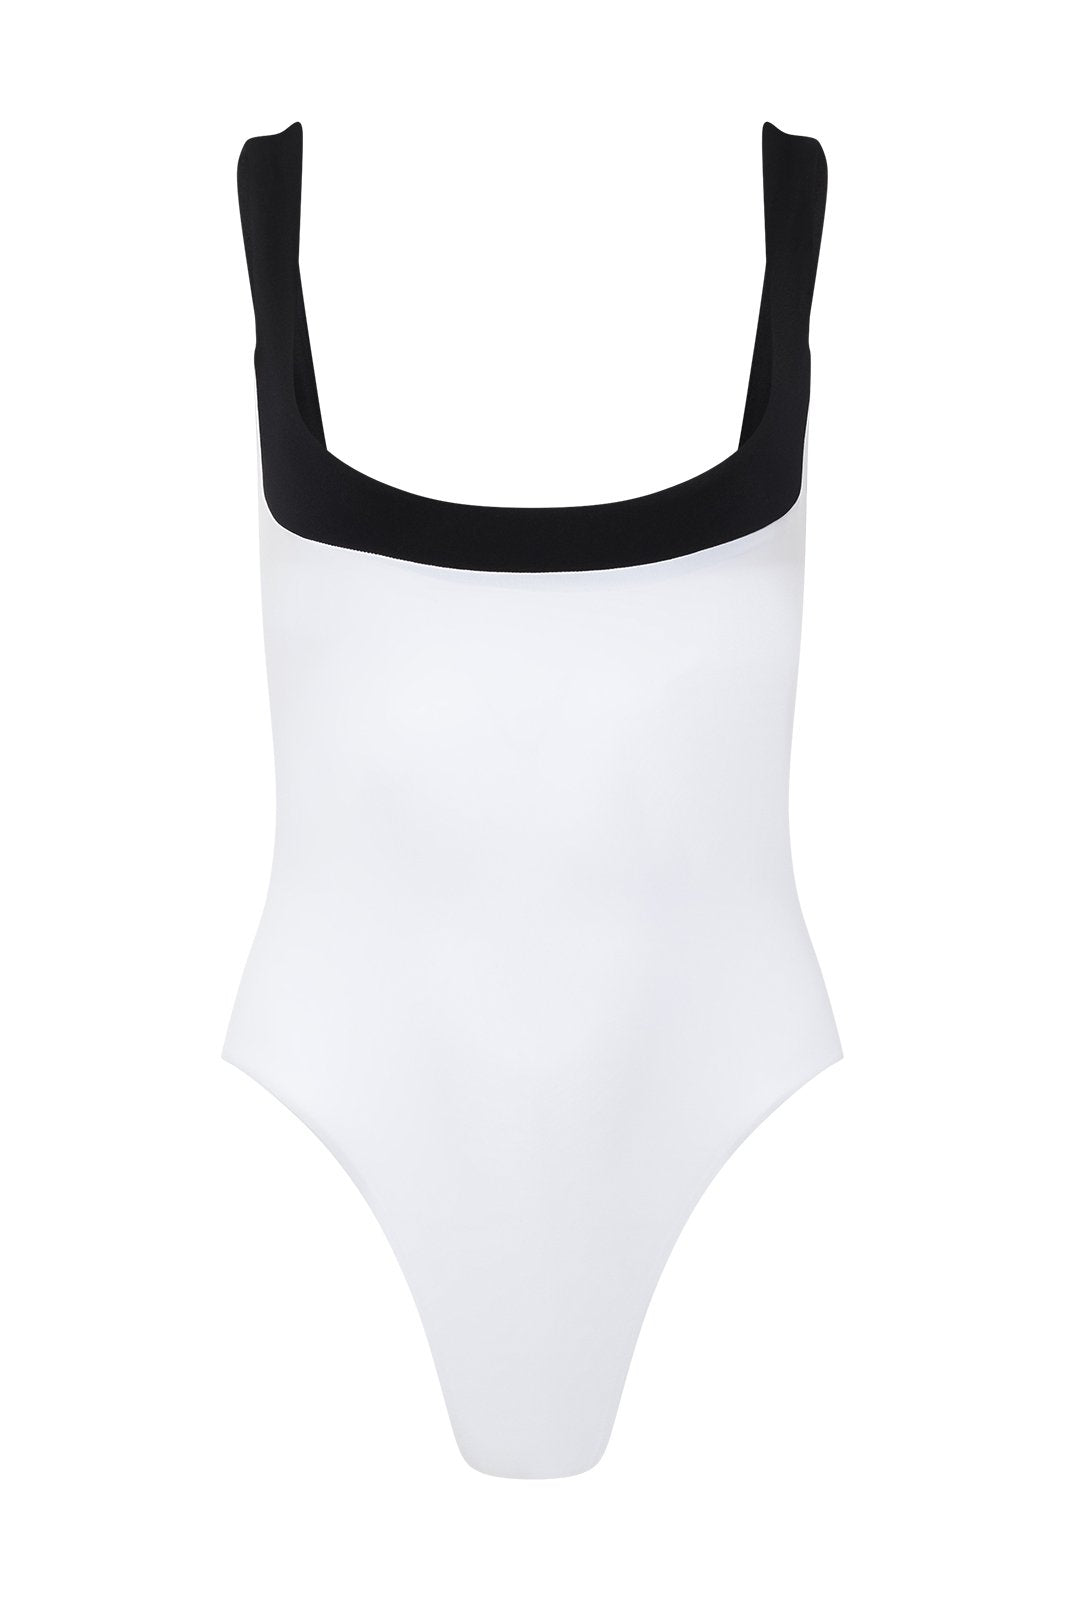 Cecil Swimsuit in White by Maison De Mode - Cassea Swim